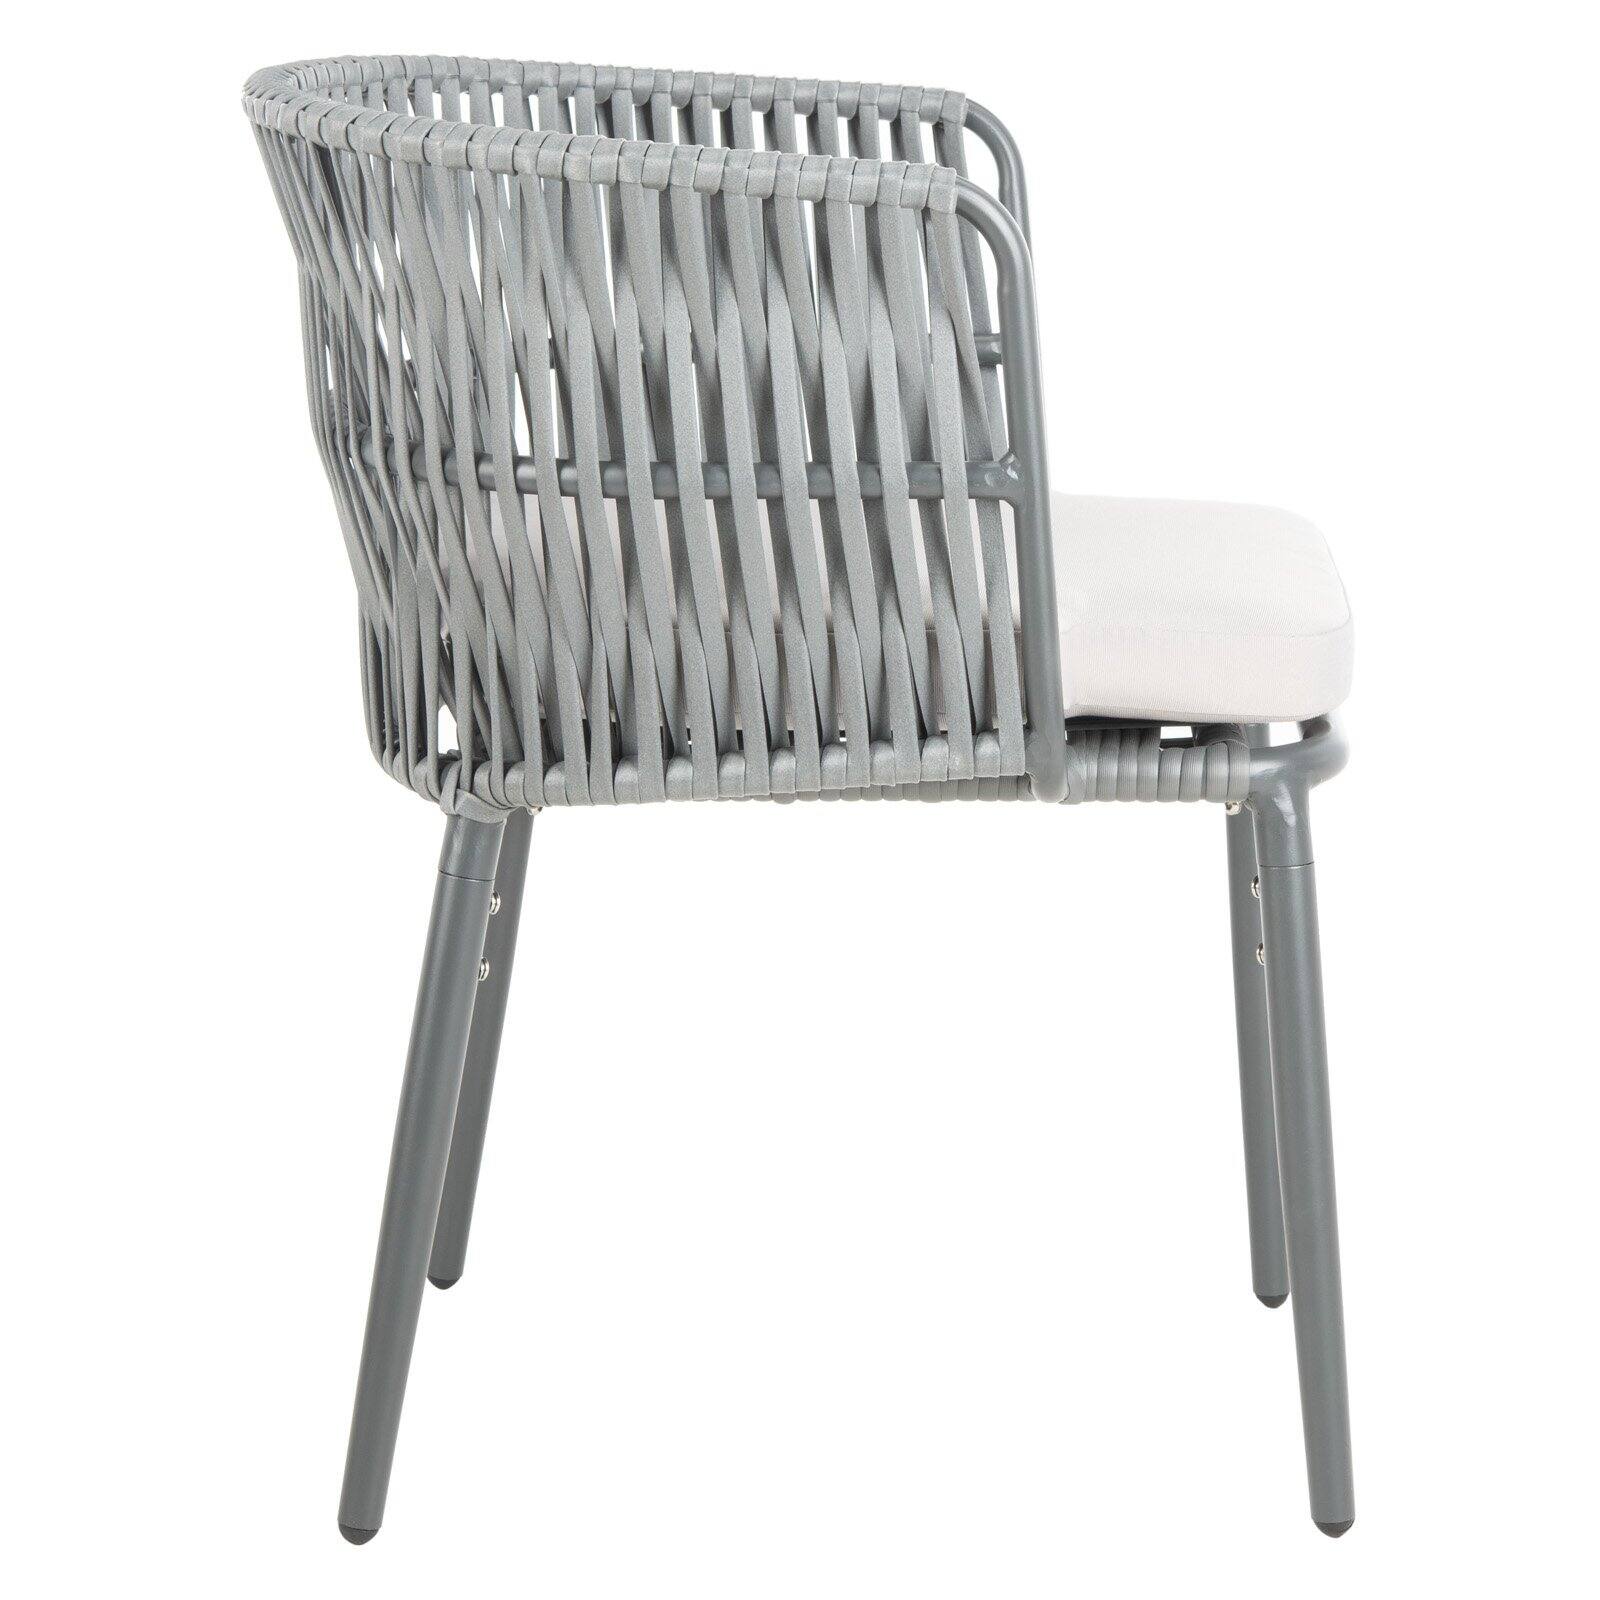 SAFAVIEH Kiyan Outdoor Patio Rope Chair, Grey/Cushion, Set of 2 - image 4 of 10